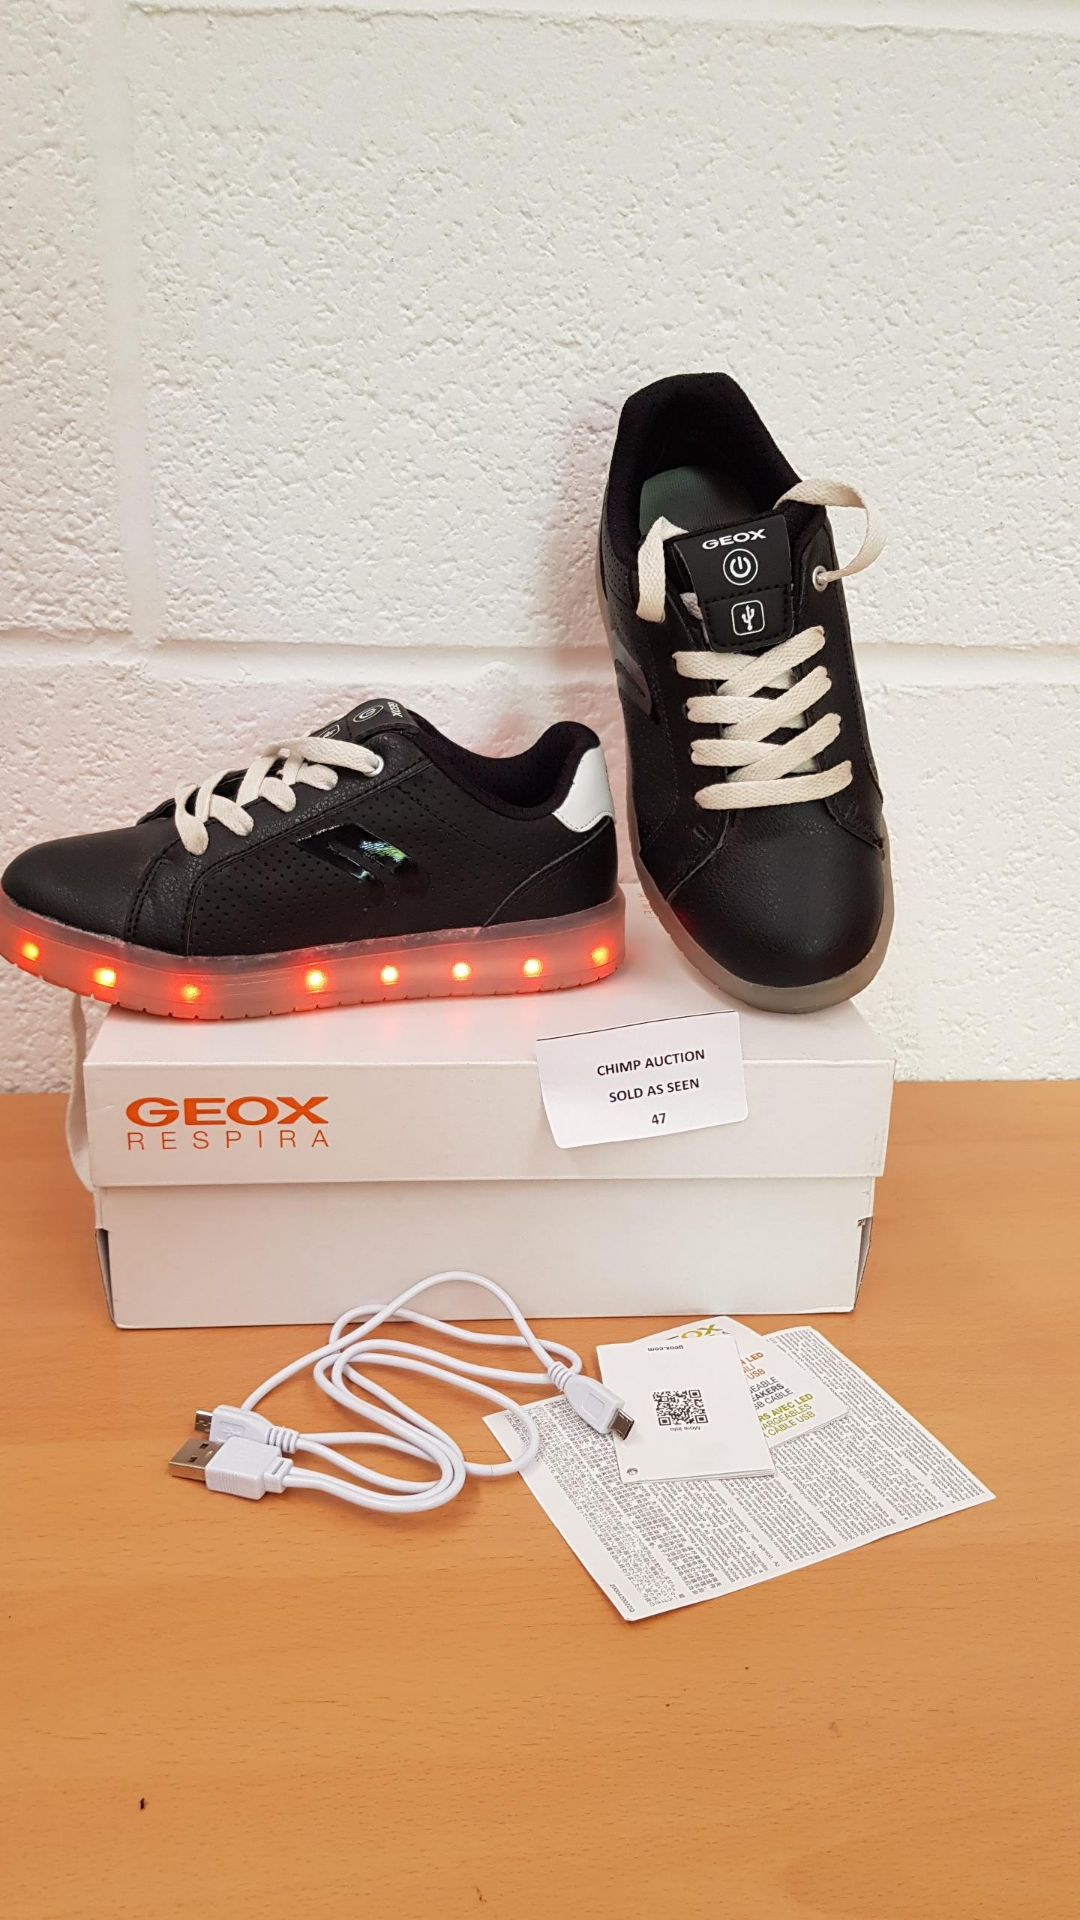 Geox Respira kids Light shoes shoes uk size 12.5